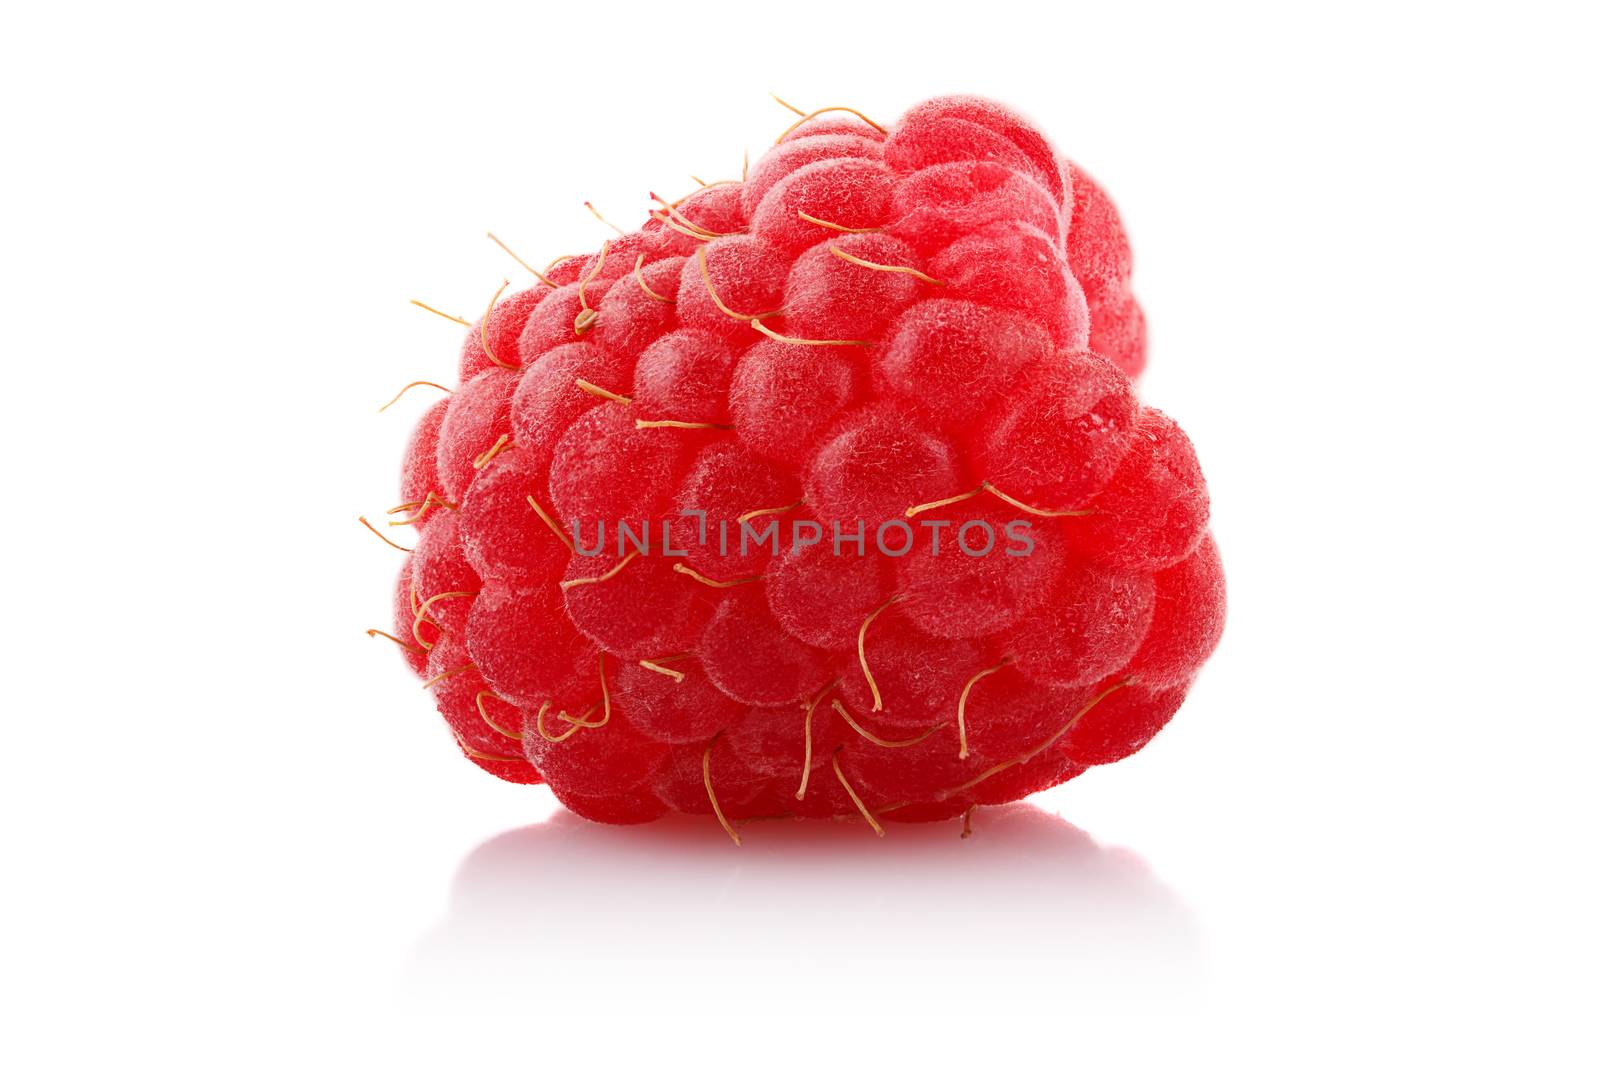 One ripe raspberry on white background.